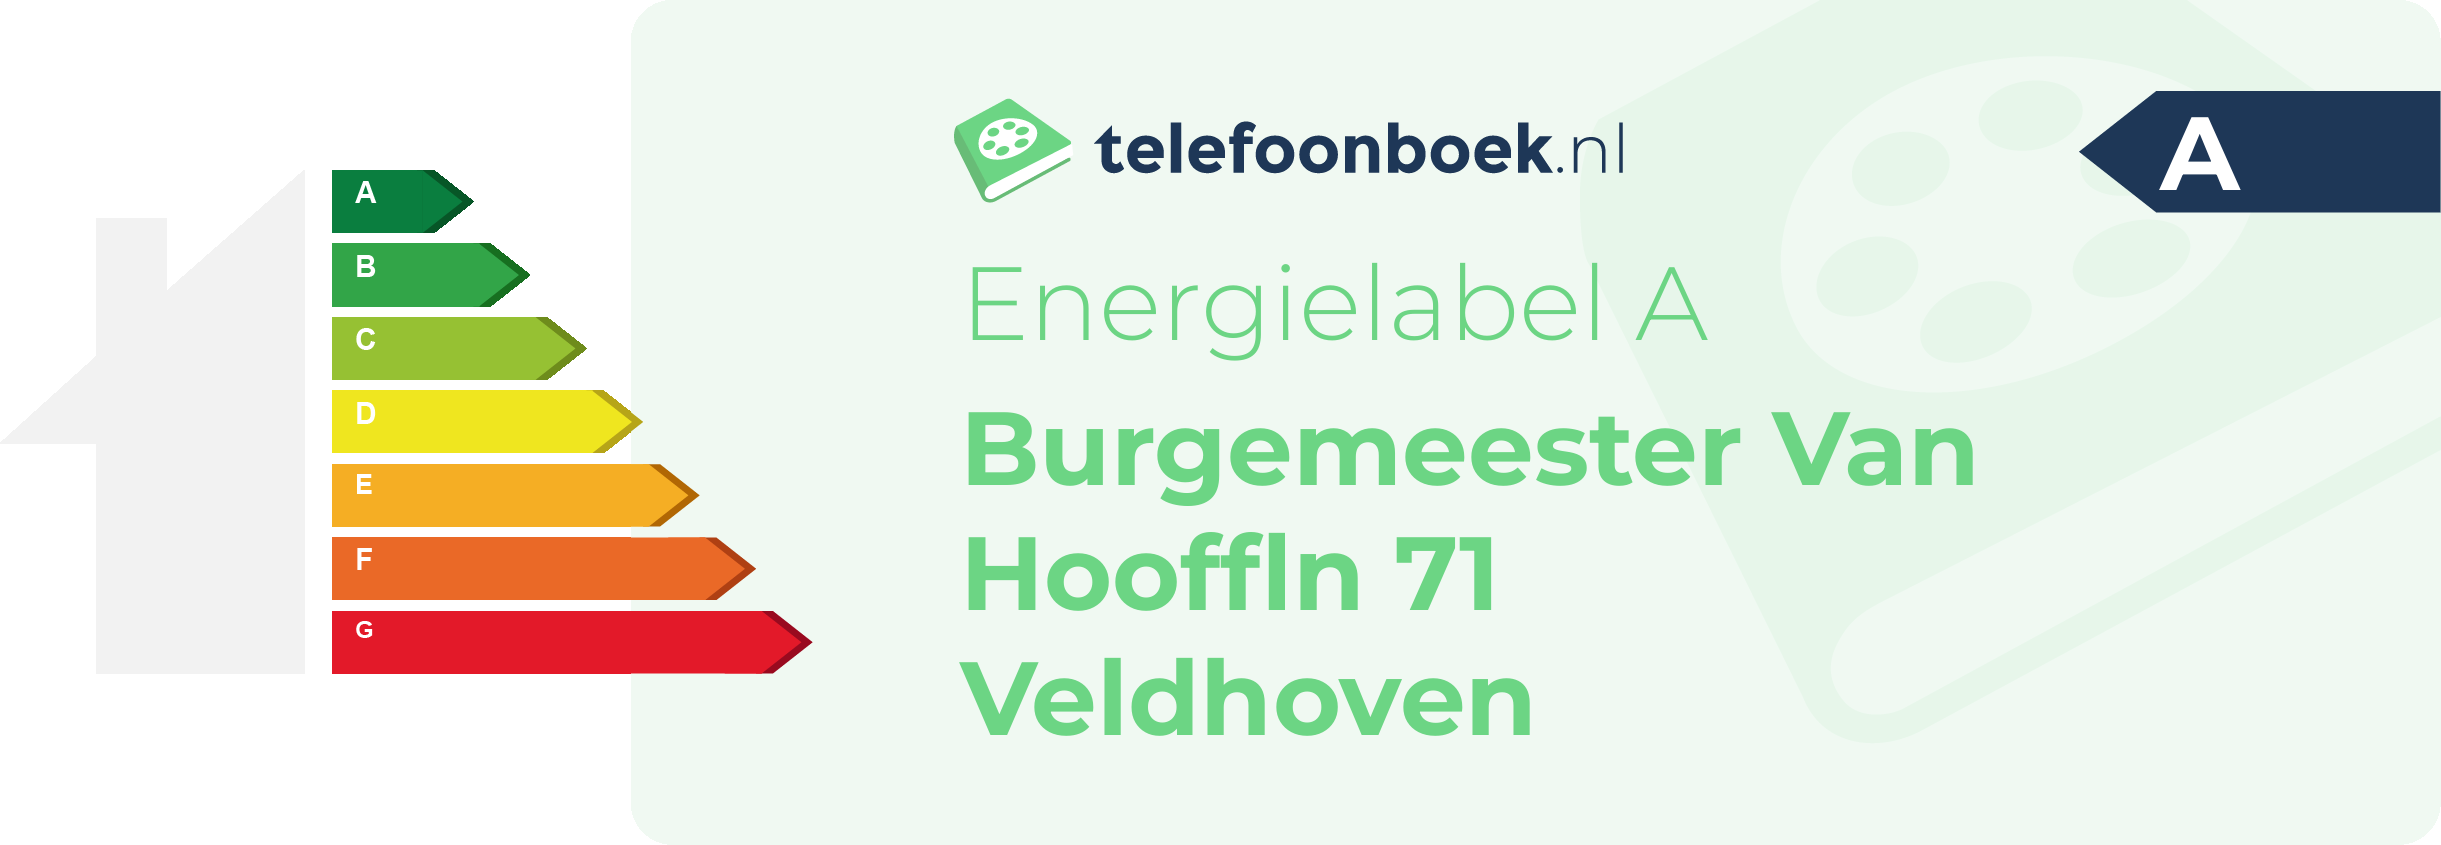 Energielabel Burgemeester Van Hooffln 71 Veldhoven